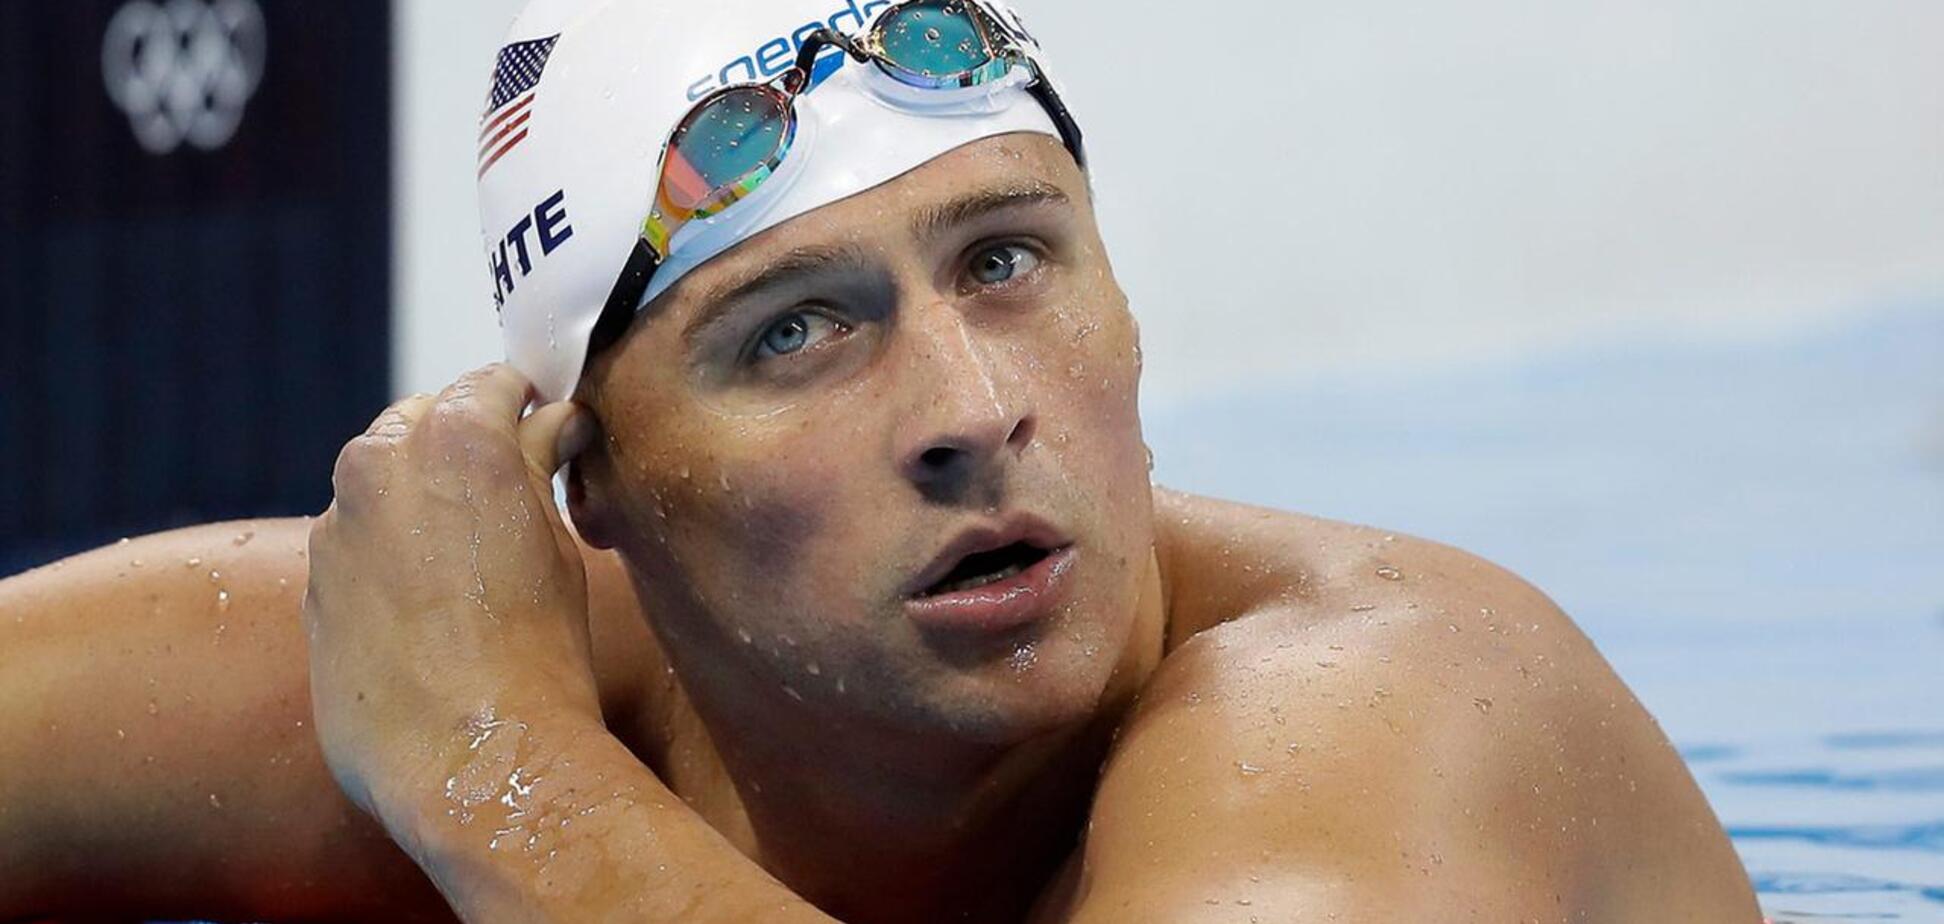 Допинг-скандал: попался олимпийский чемпион по плаванию